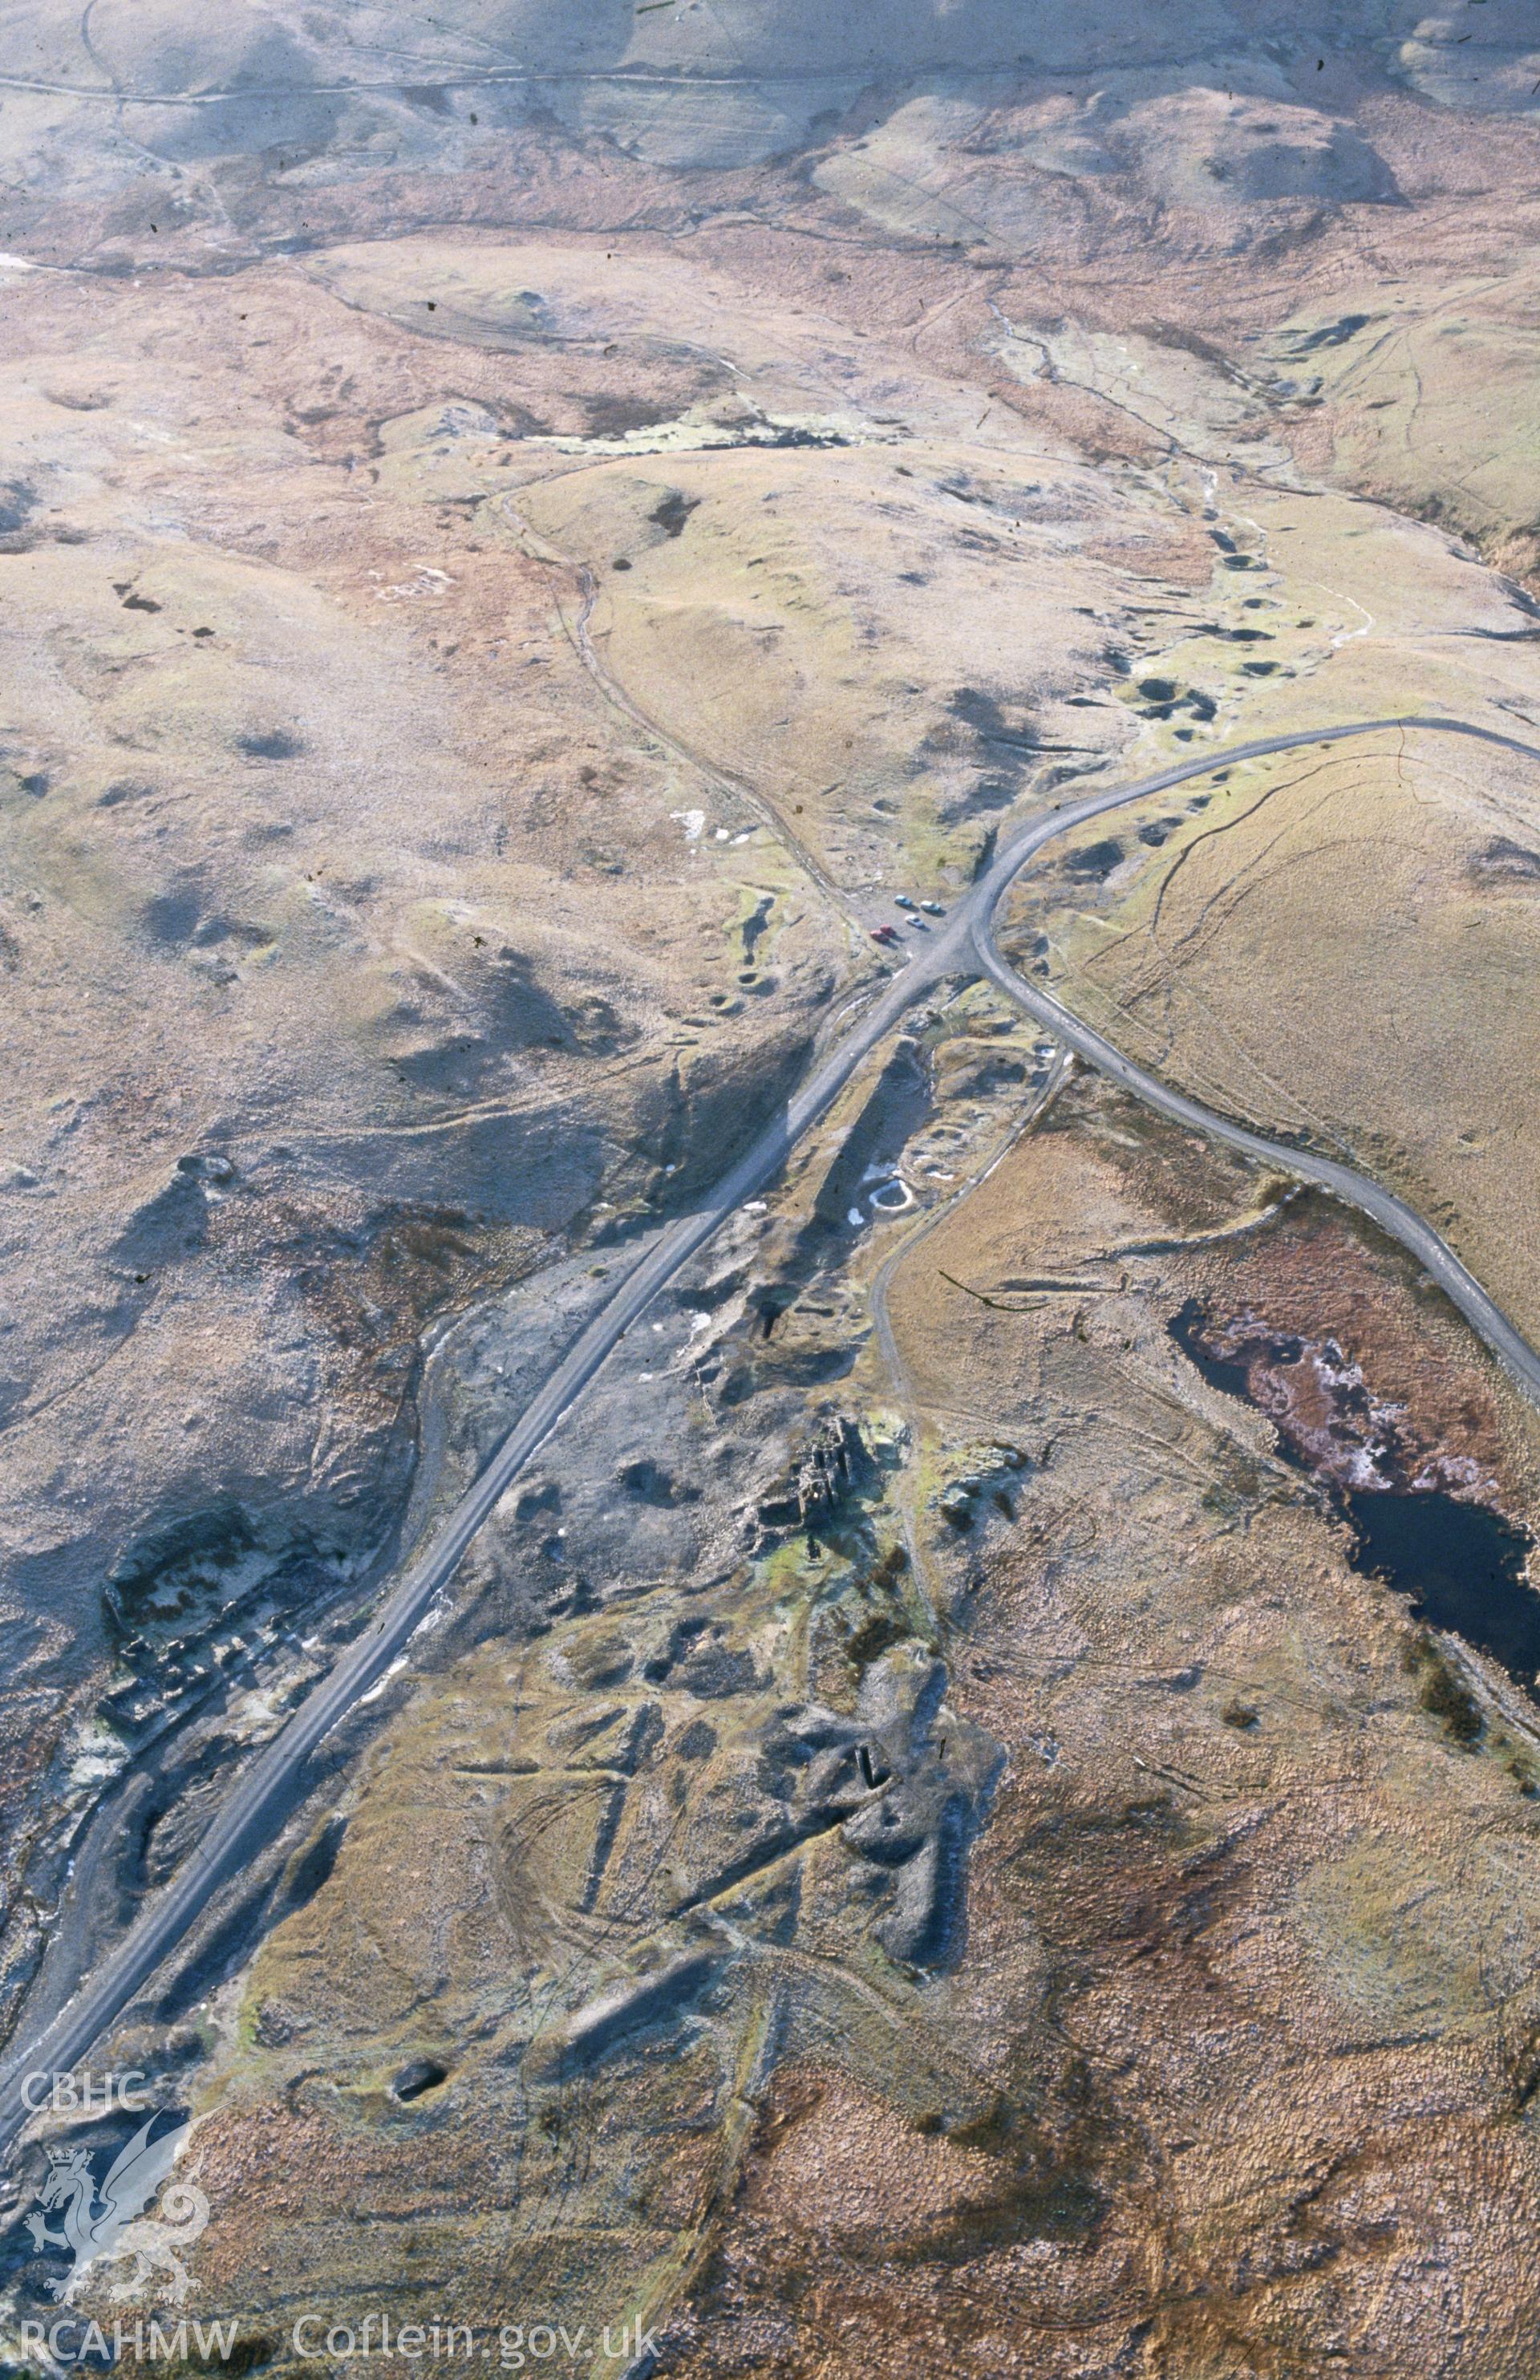 Slide of RCAHMW colour oblique aerial photograph of Esgair Hir Lead Mine, taken by C.R. Musson, 20/12/1992.